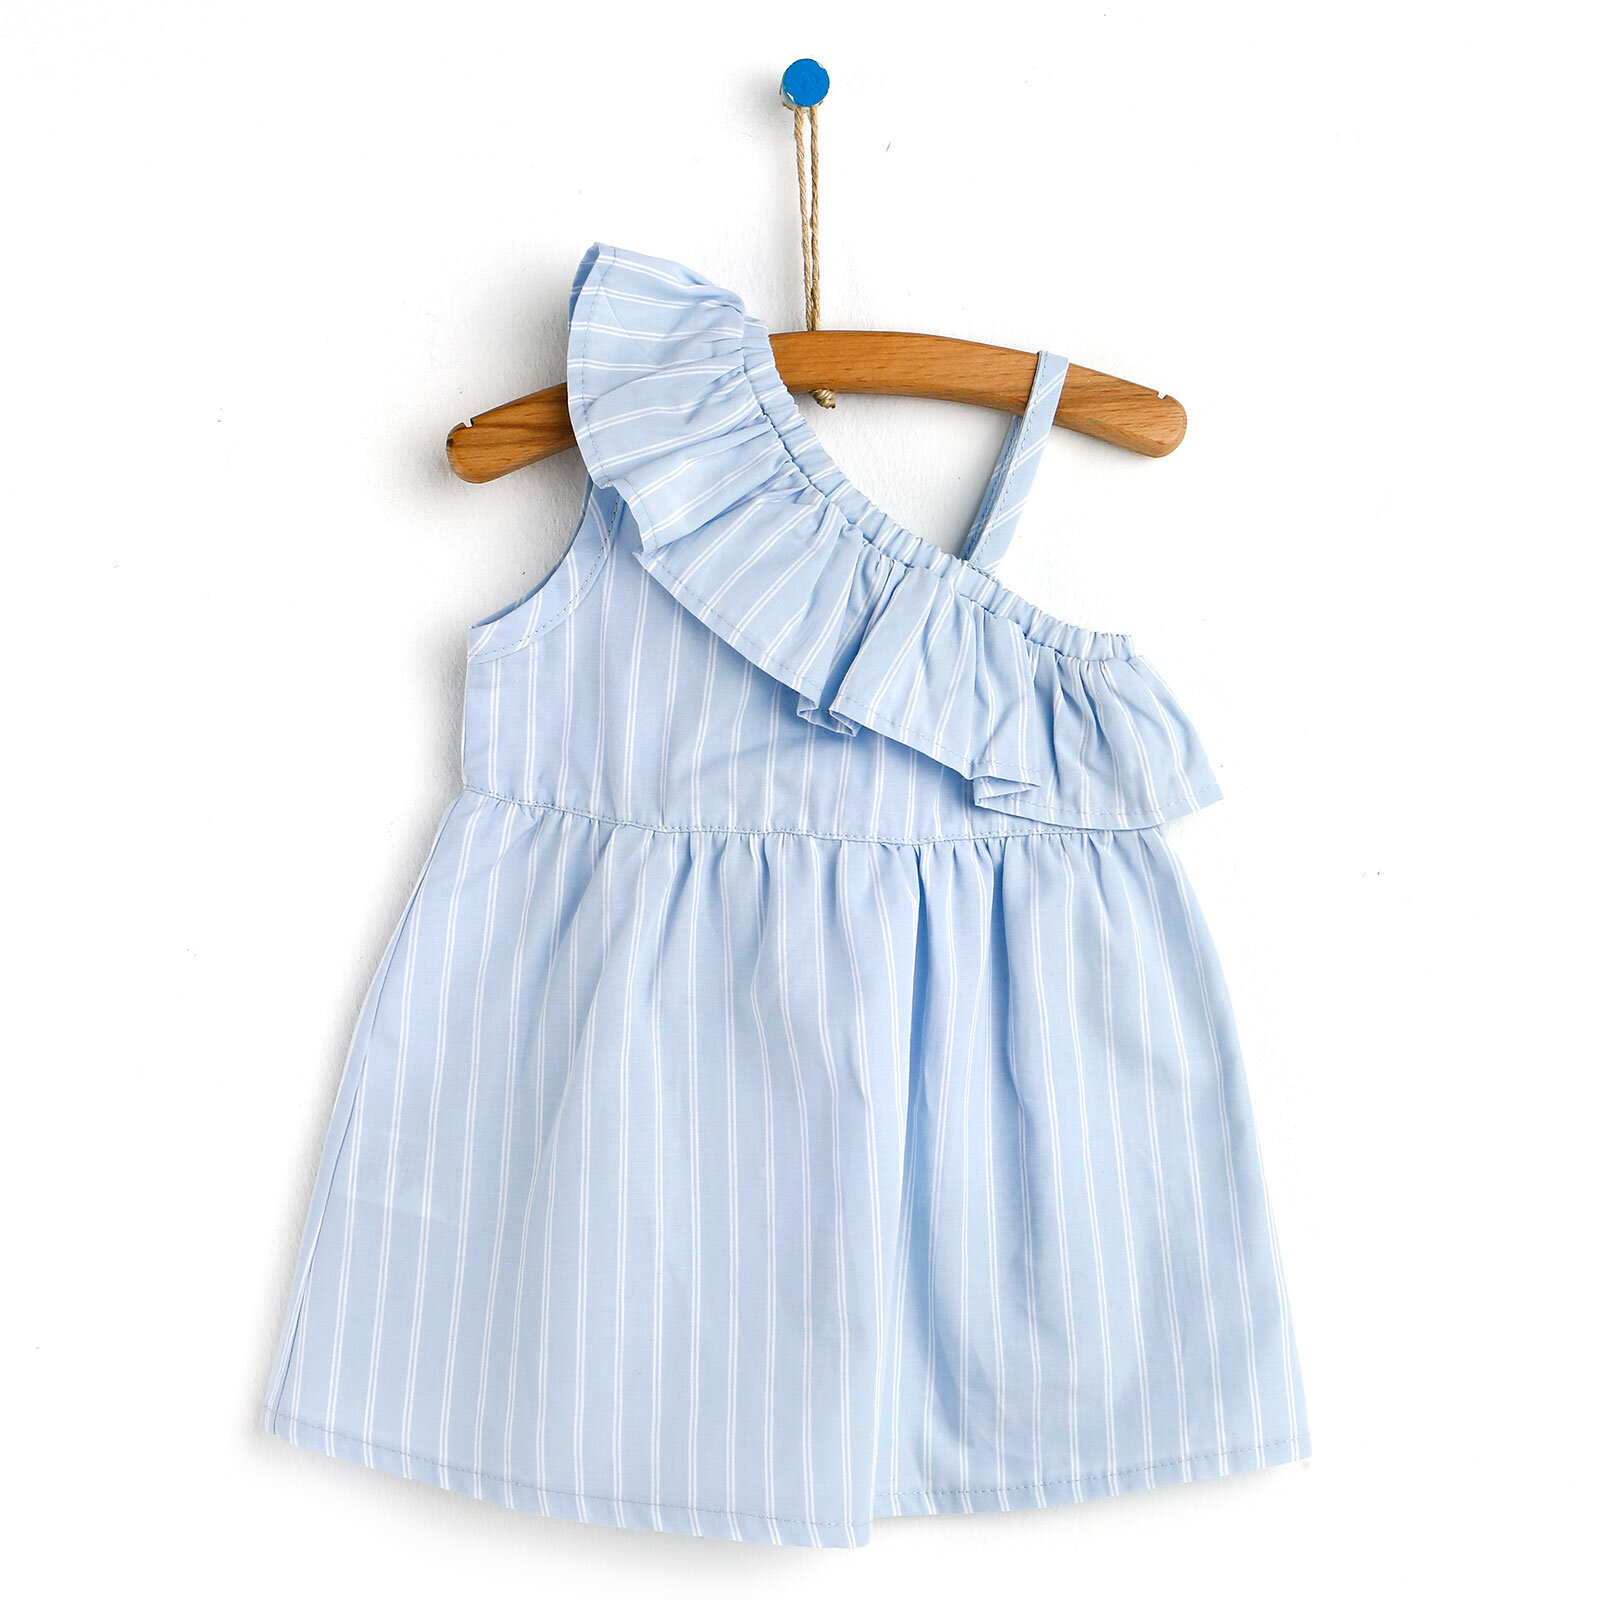 Basic Kız Bebek Mavi Elbise